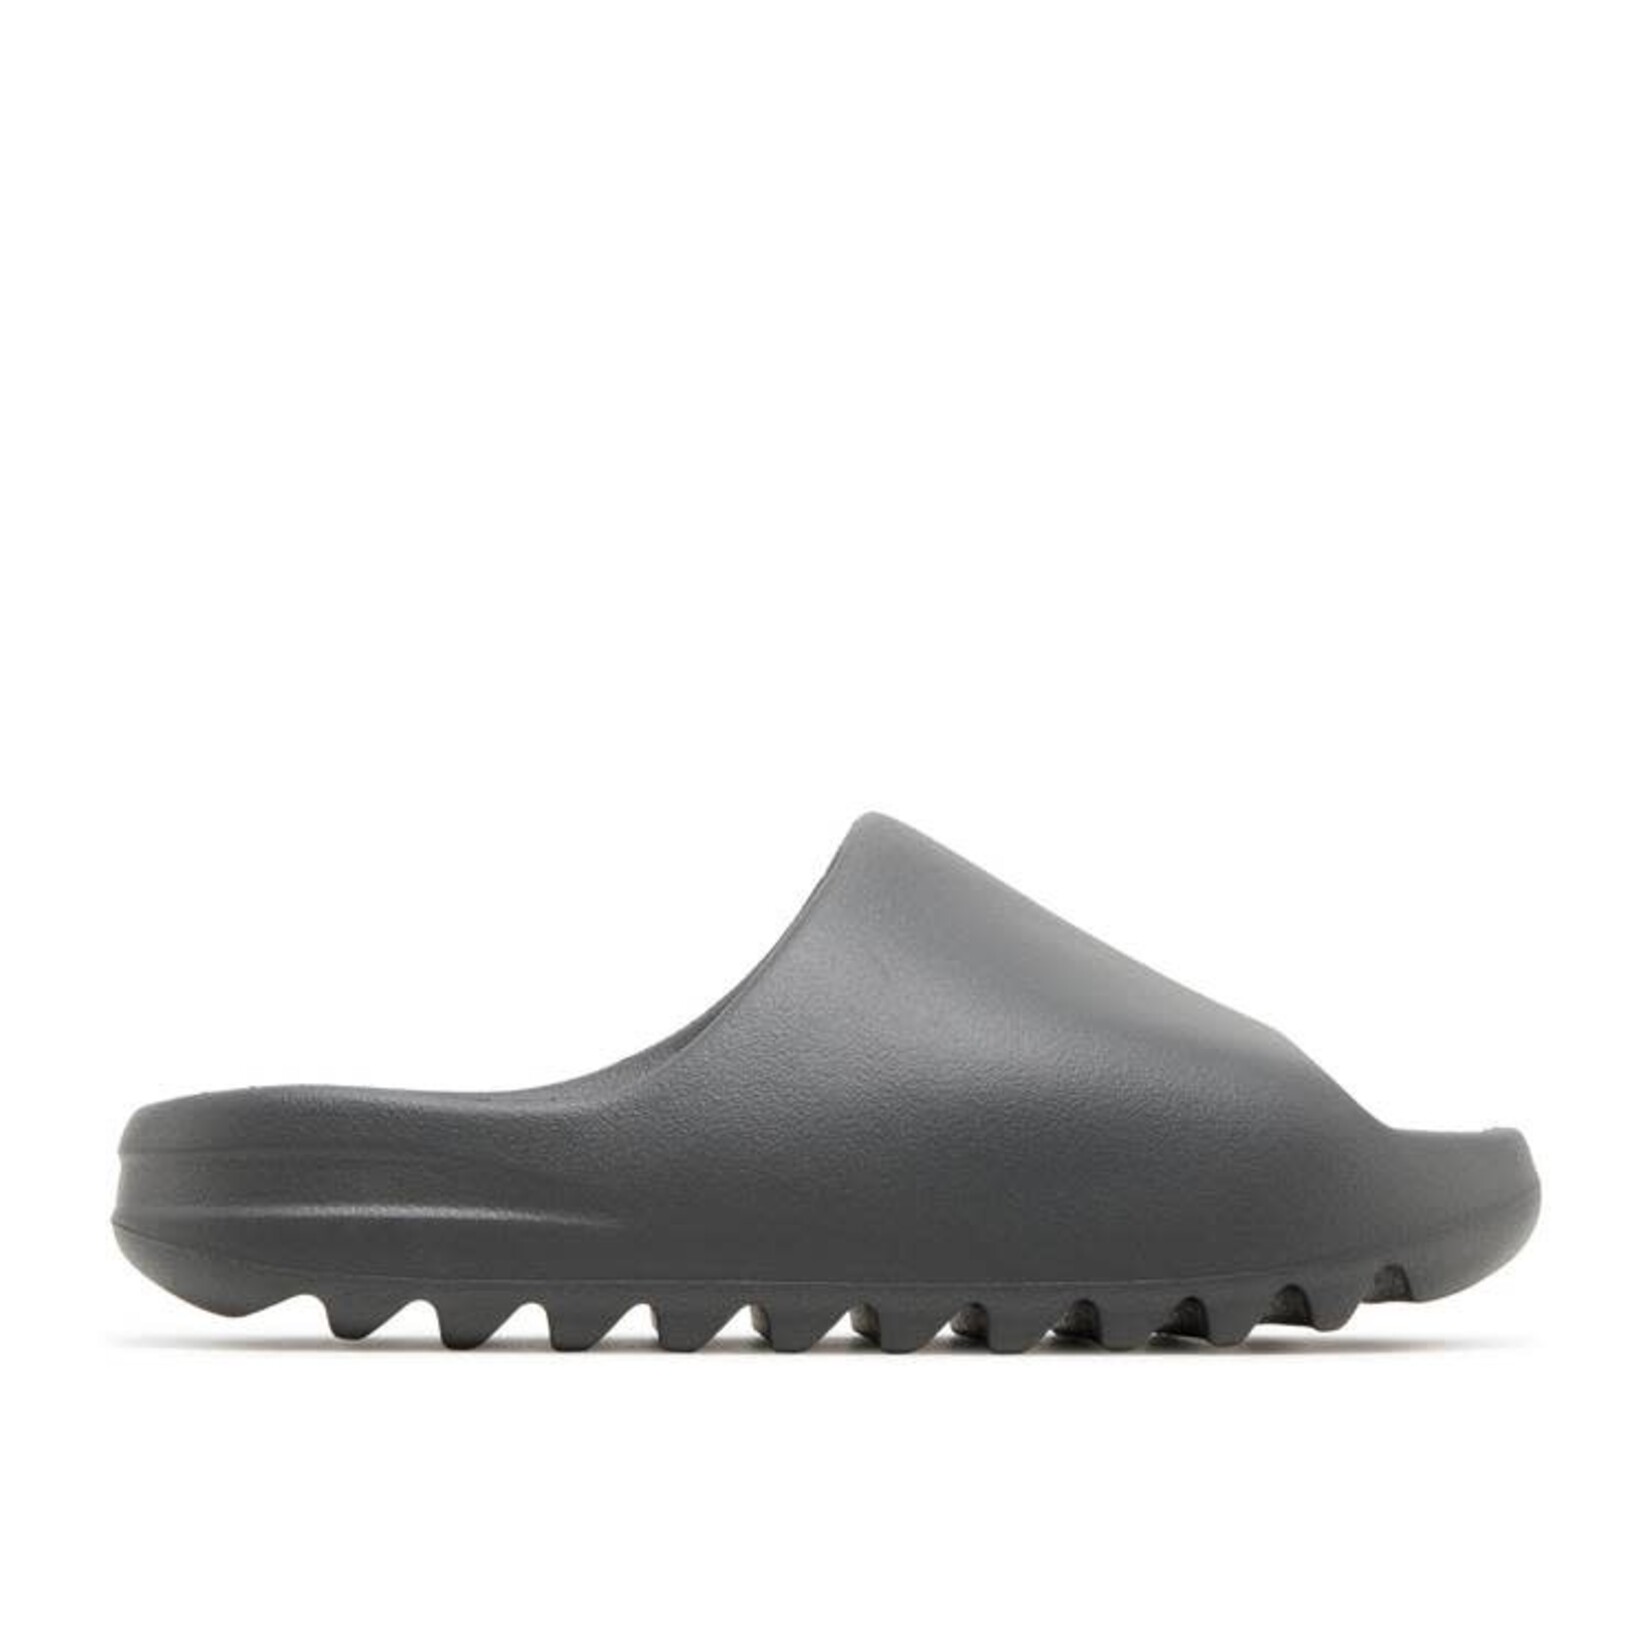 Adidas Adidas Yeezy Slide Granite Size 12, DS BRAND NEW